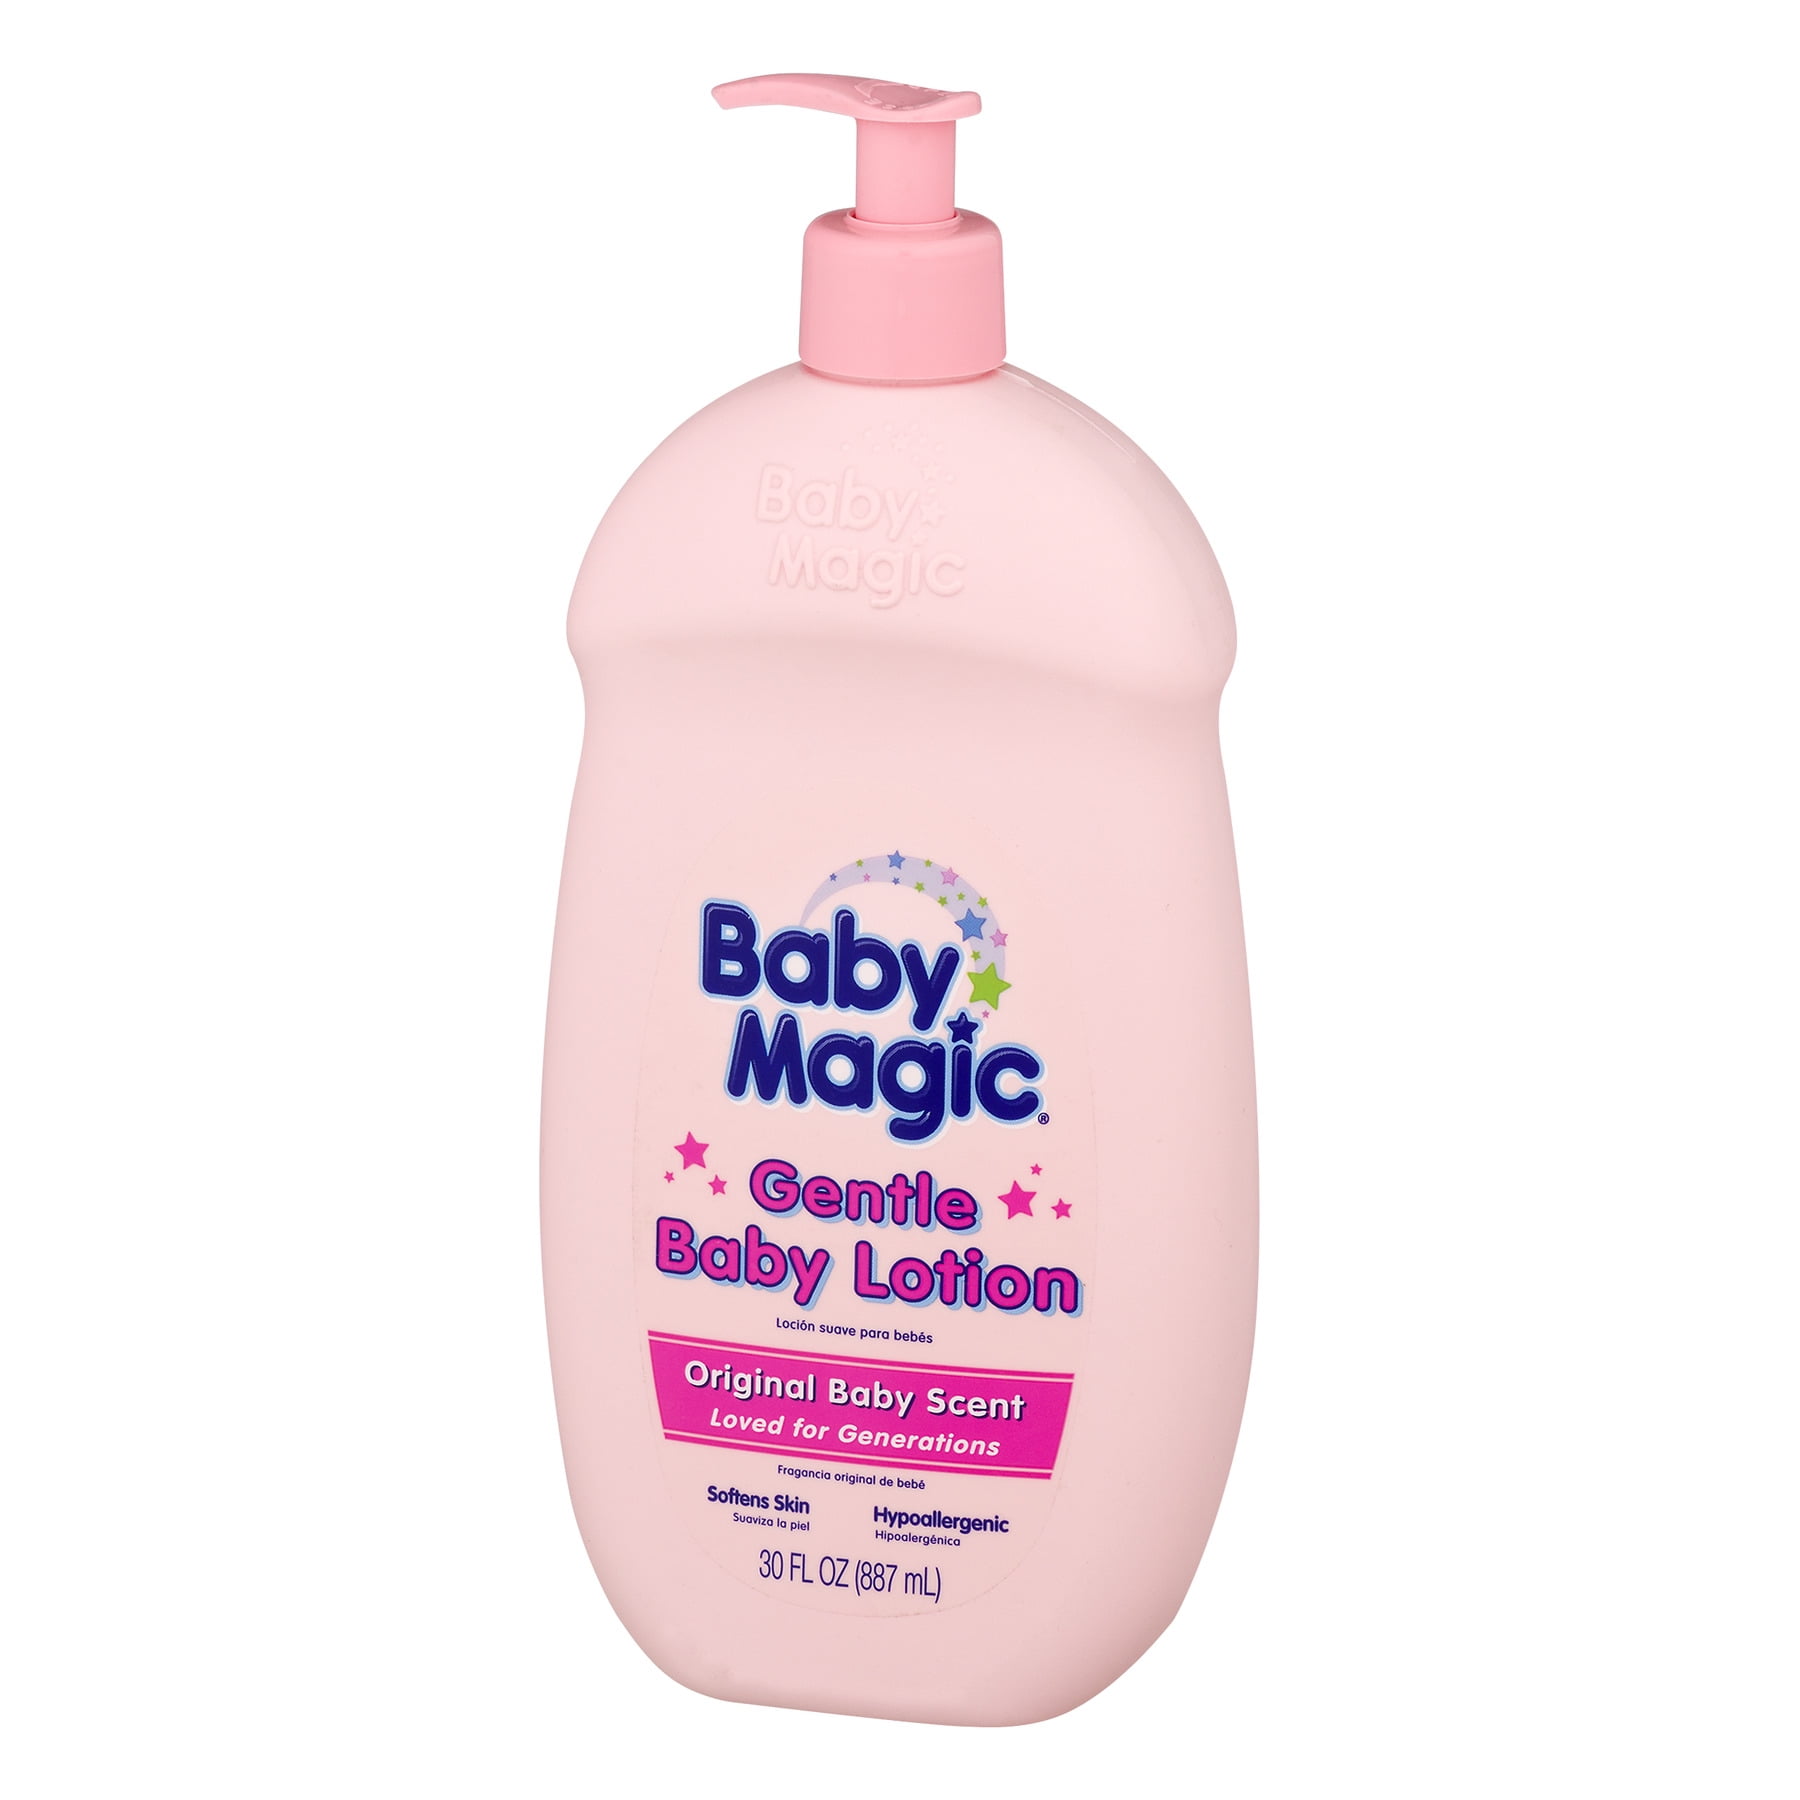 Baby Magic Gentle Baby Lotion Original Baby Scent 30 Fl Oz